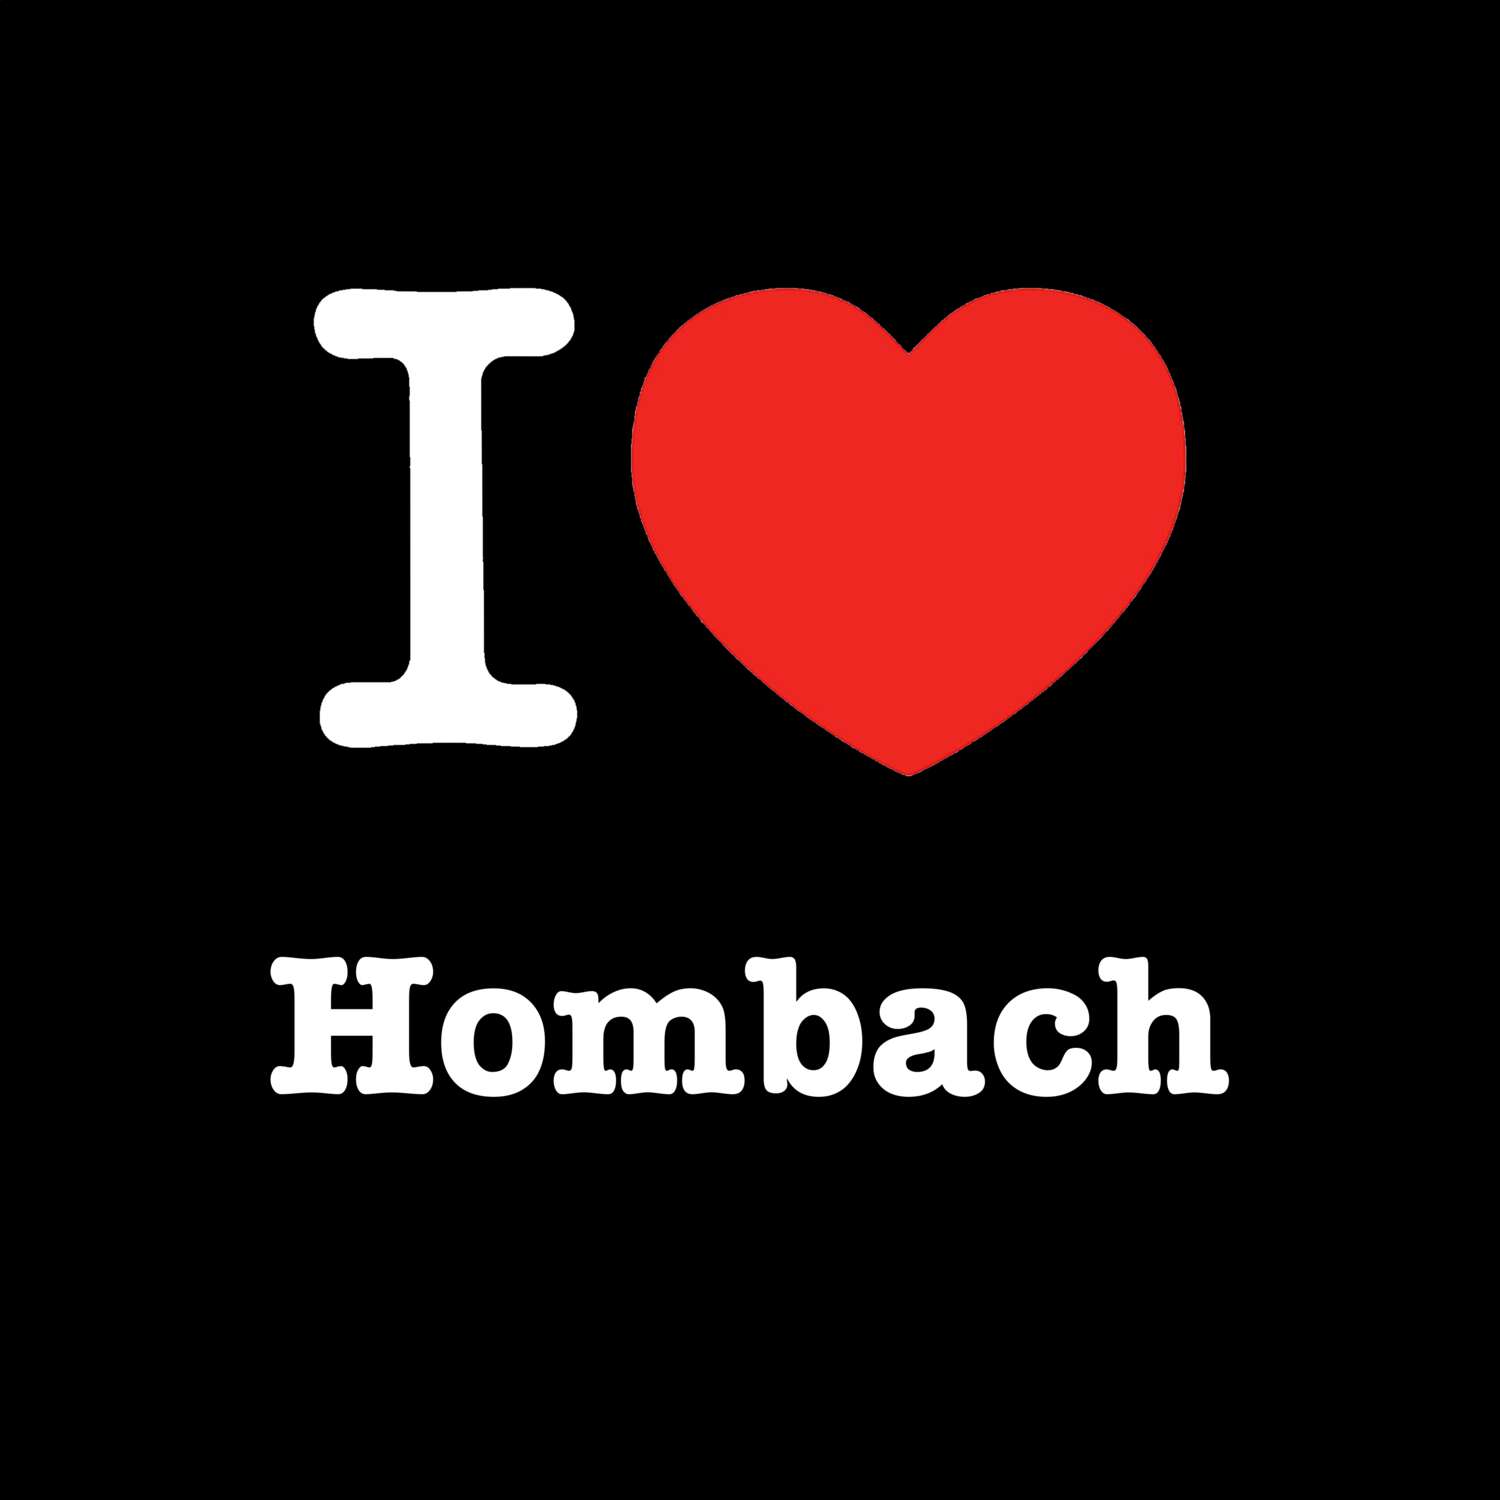 Hombach T-Shirt »I love«